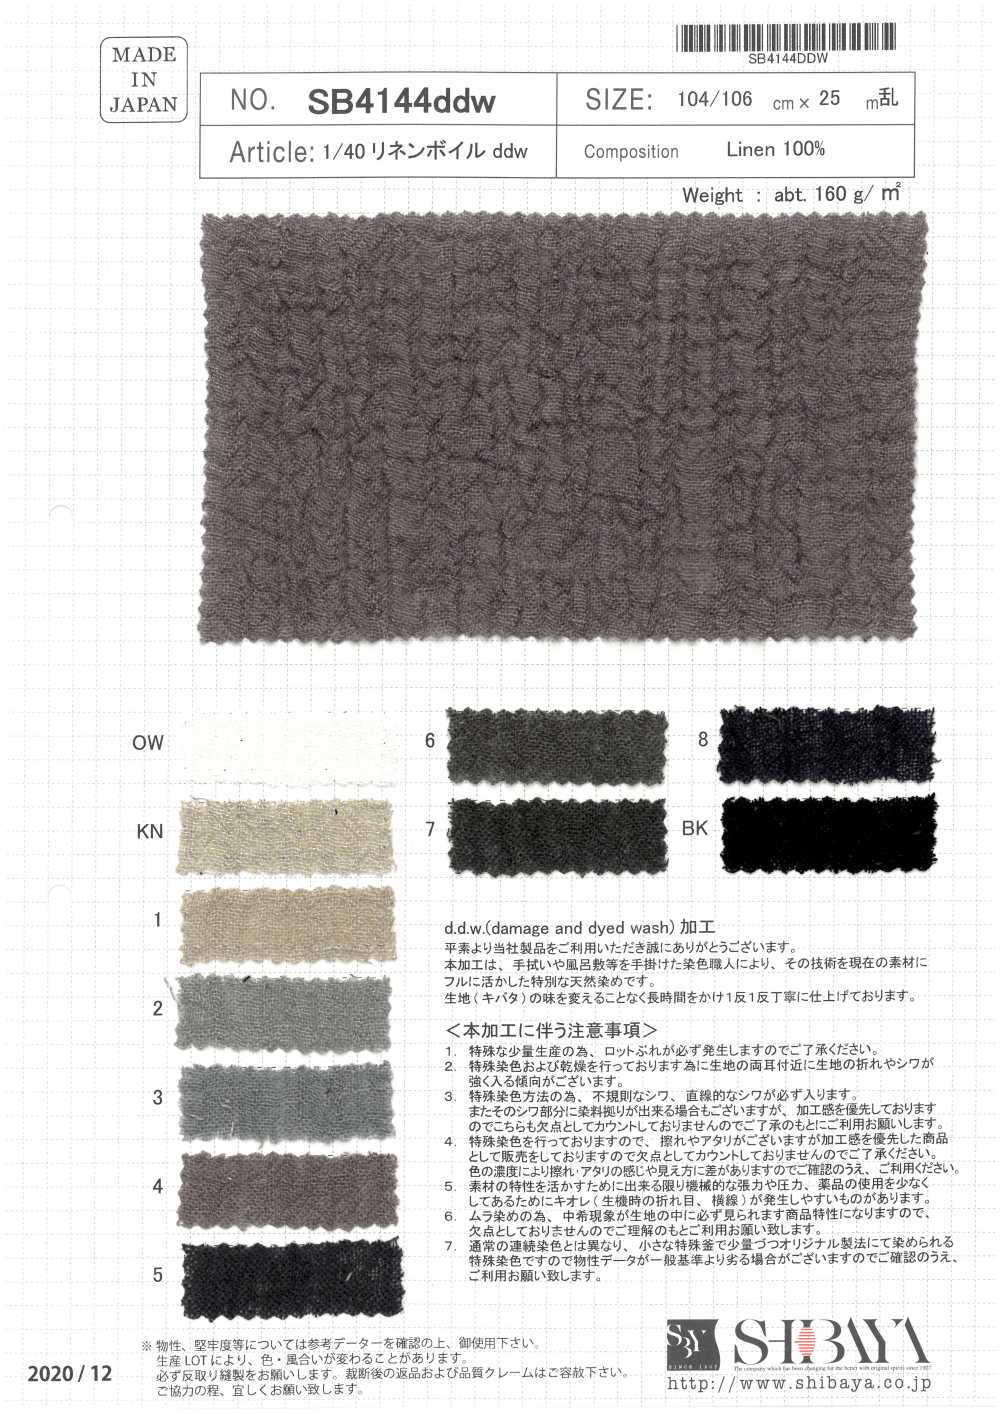 SB4144ddw 1/40 Linho Voile DDW[Têxtil / Tecido] SHIBAYA